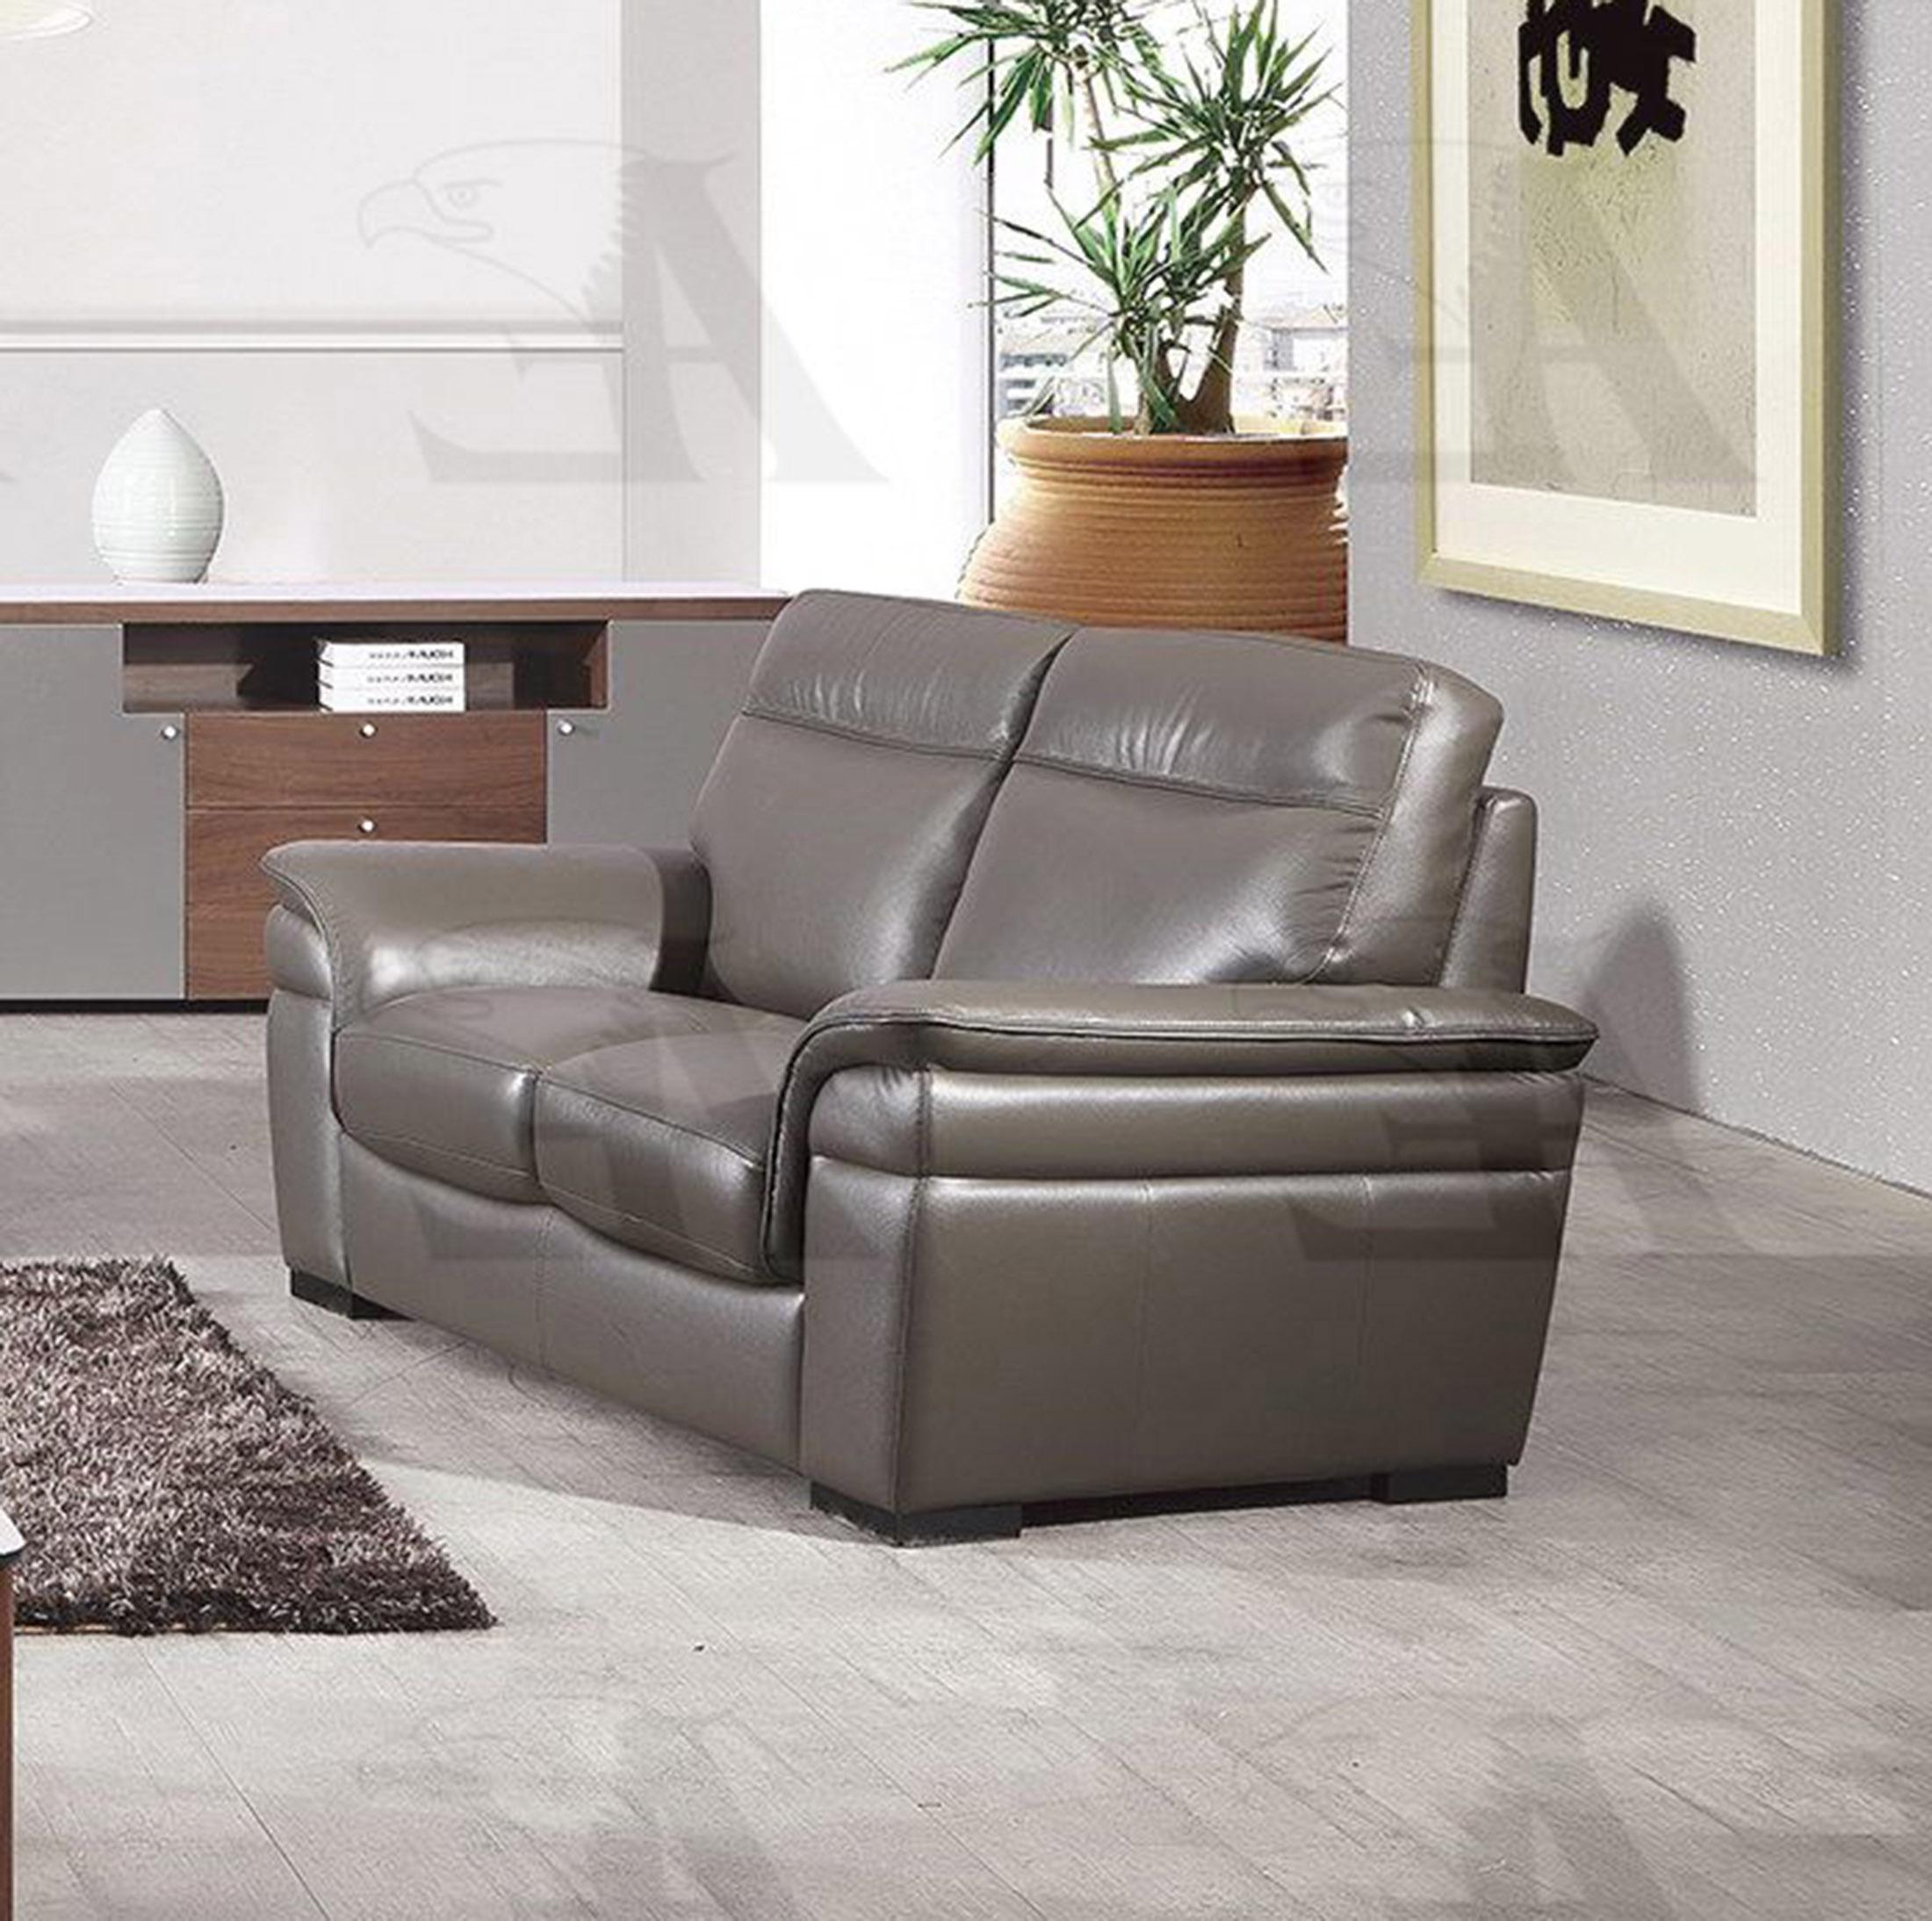 

    
EK020-TPE Set-2 American Eagle Furniture Sofa and Loveseat Set
